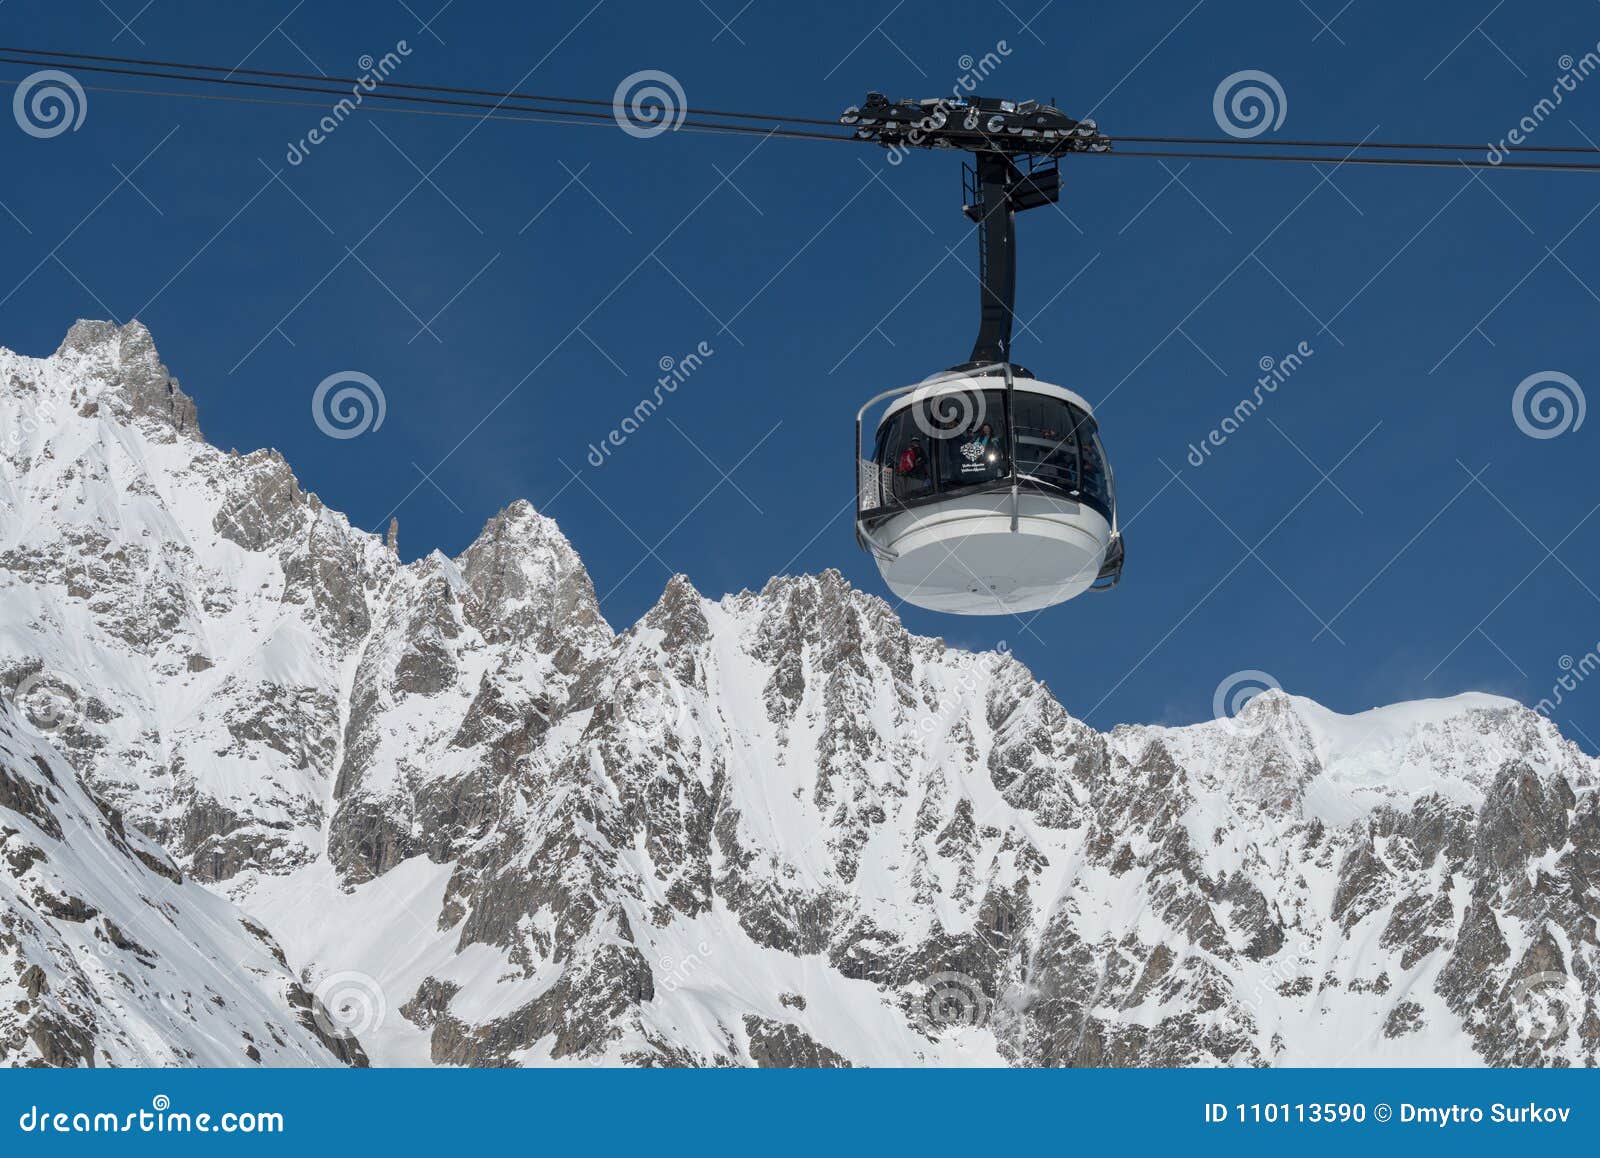 Skyway Monte Bianco, Courmayeur, Editorial Image - Image panorama, resort: